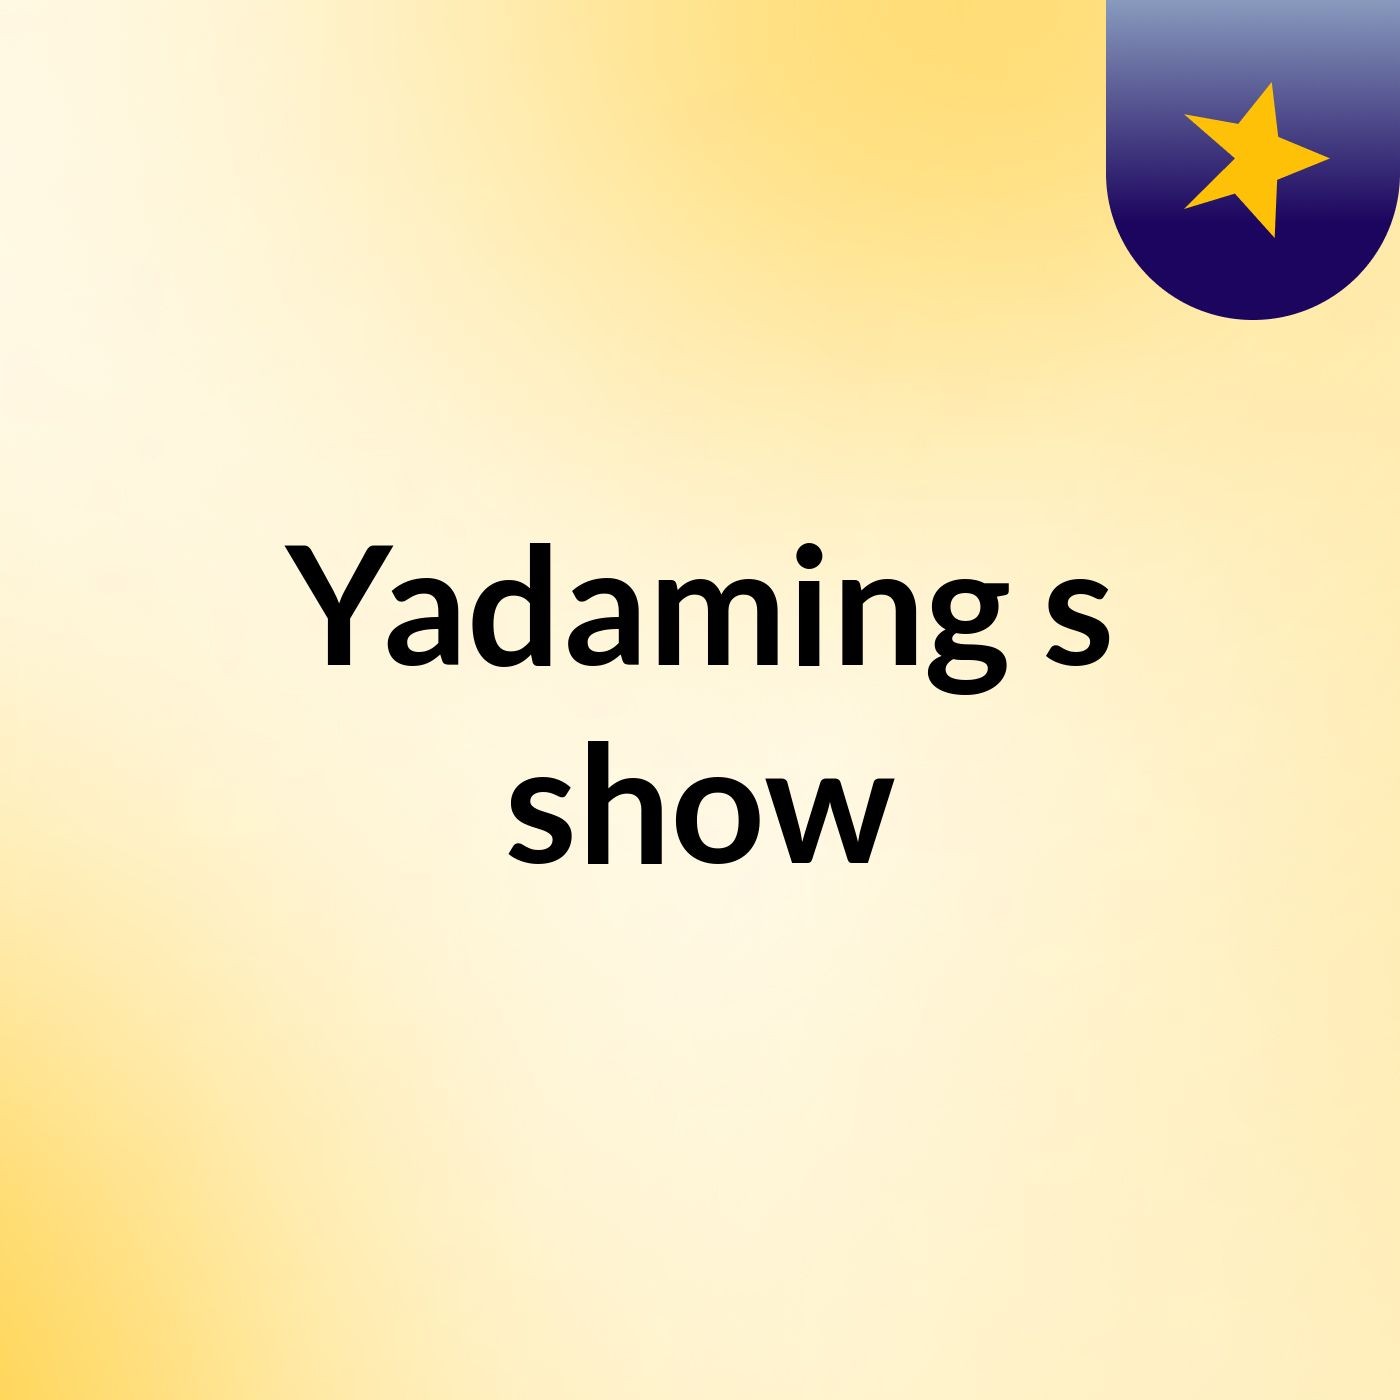 Yadaming's show